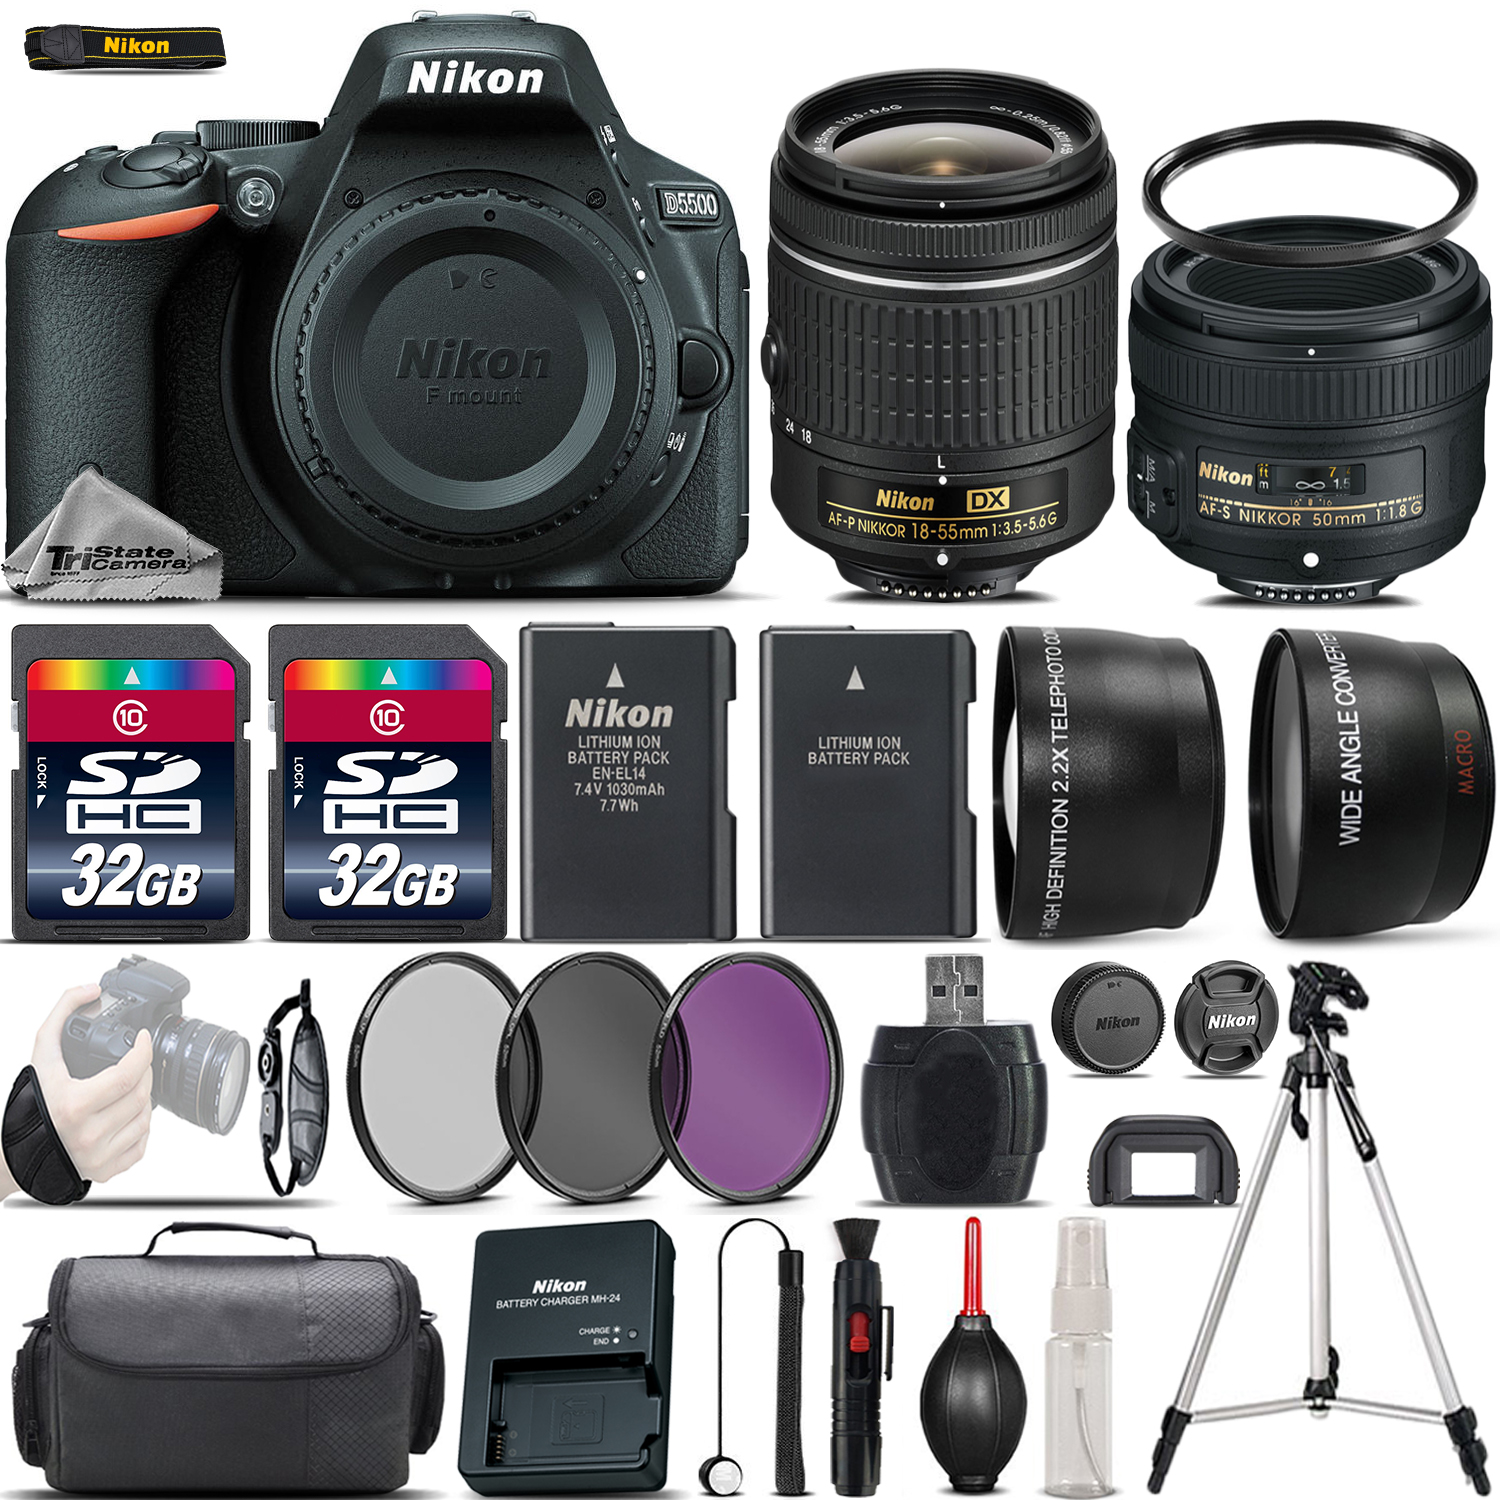 D5500 Digital SLR Camera + 18-55mm VR + 50mm 1.8G Lens + 64GB - 4 Lens Kit *FREE SHIPPING*